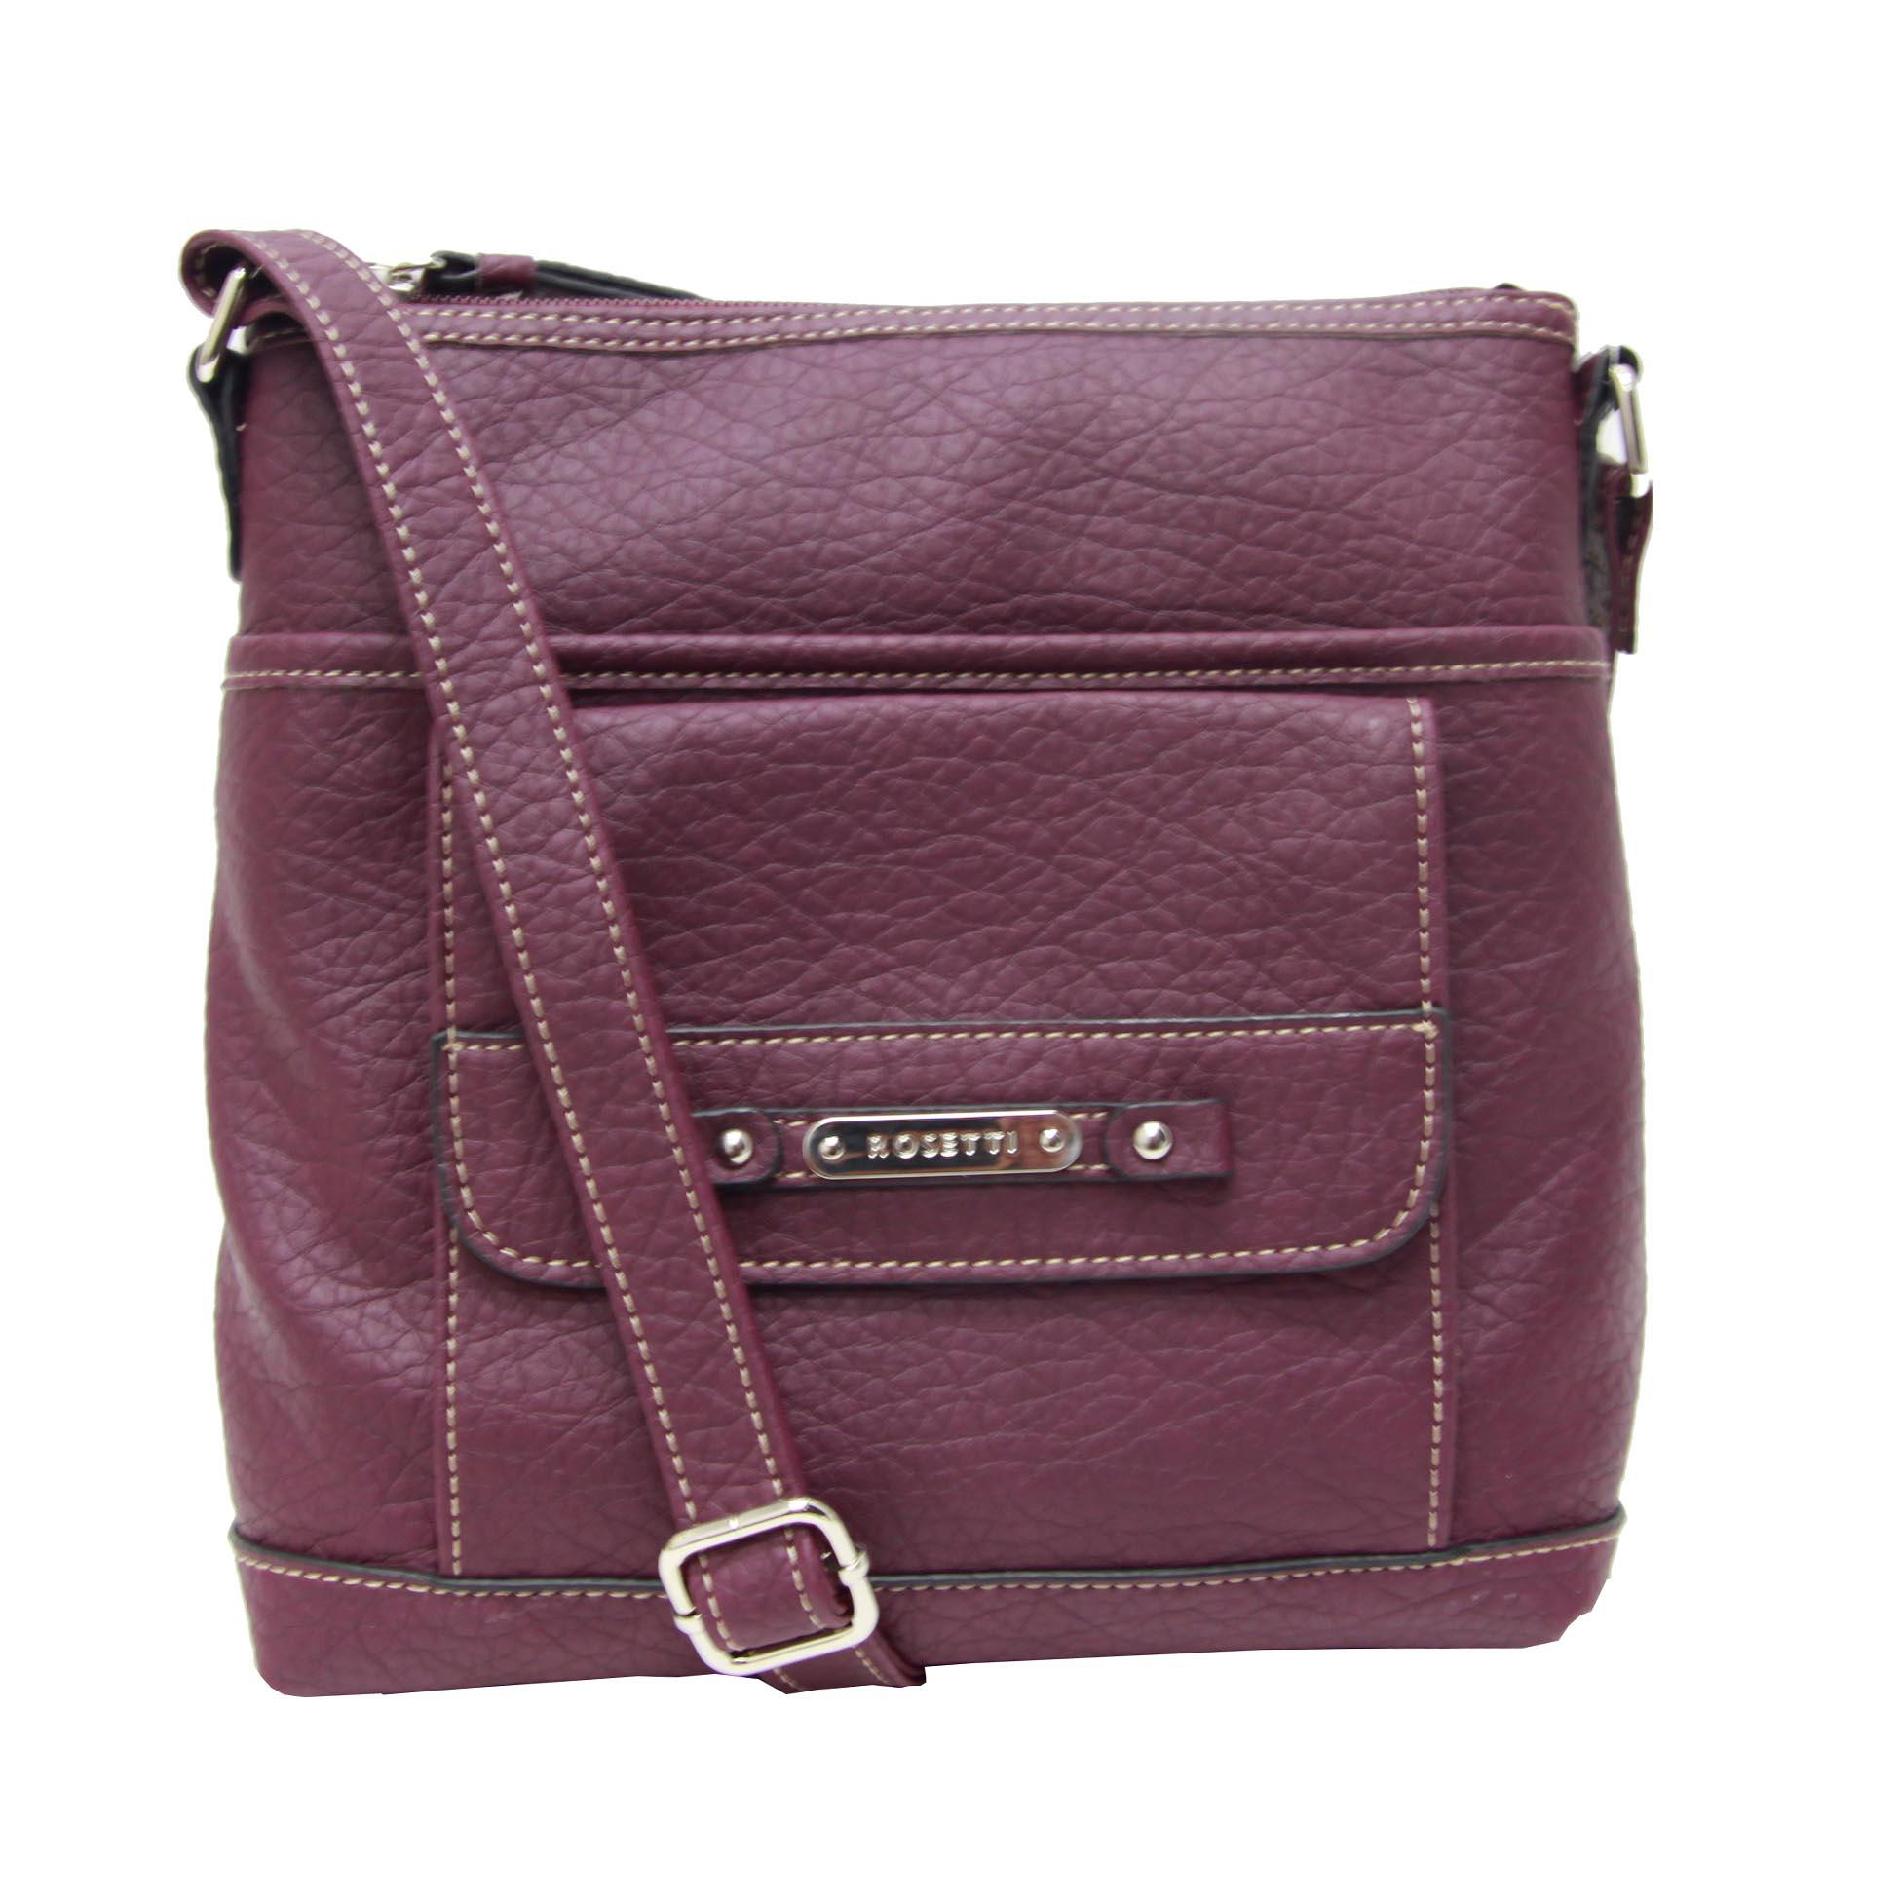 Rosetti Women's Mini Faux Leather Handbag